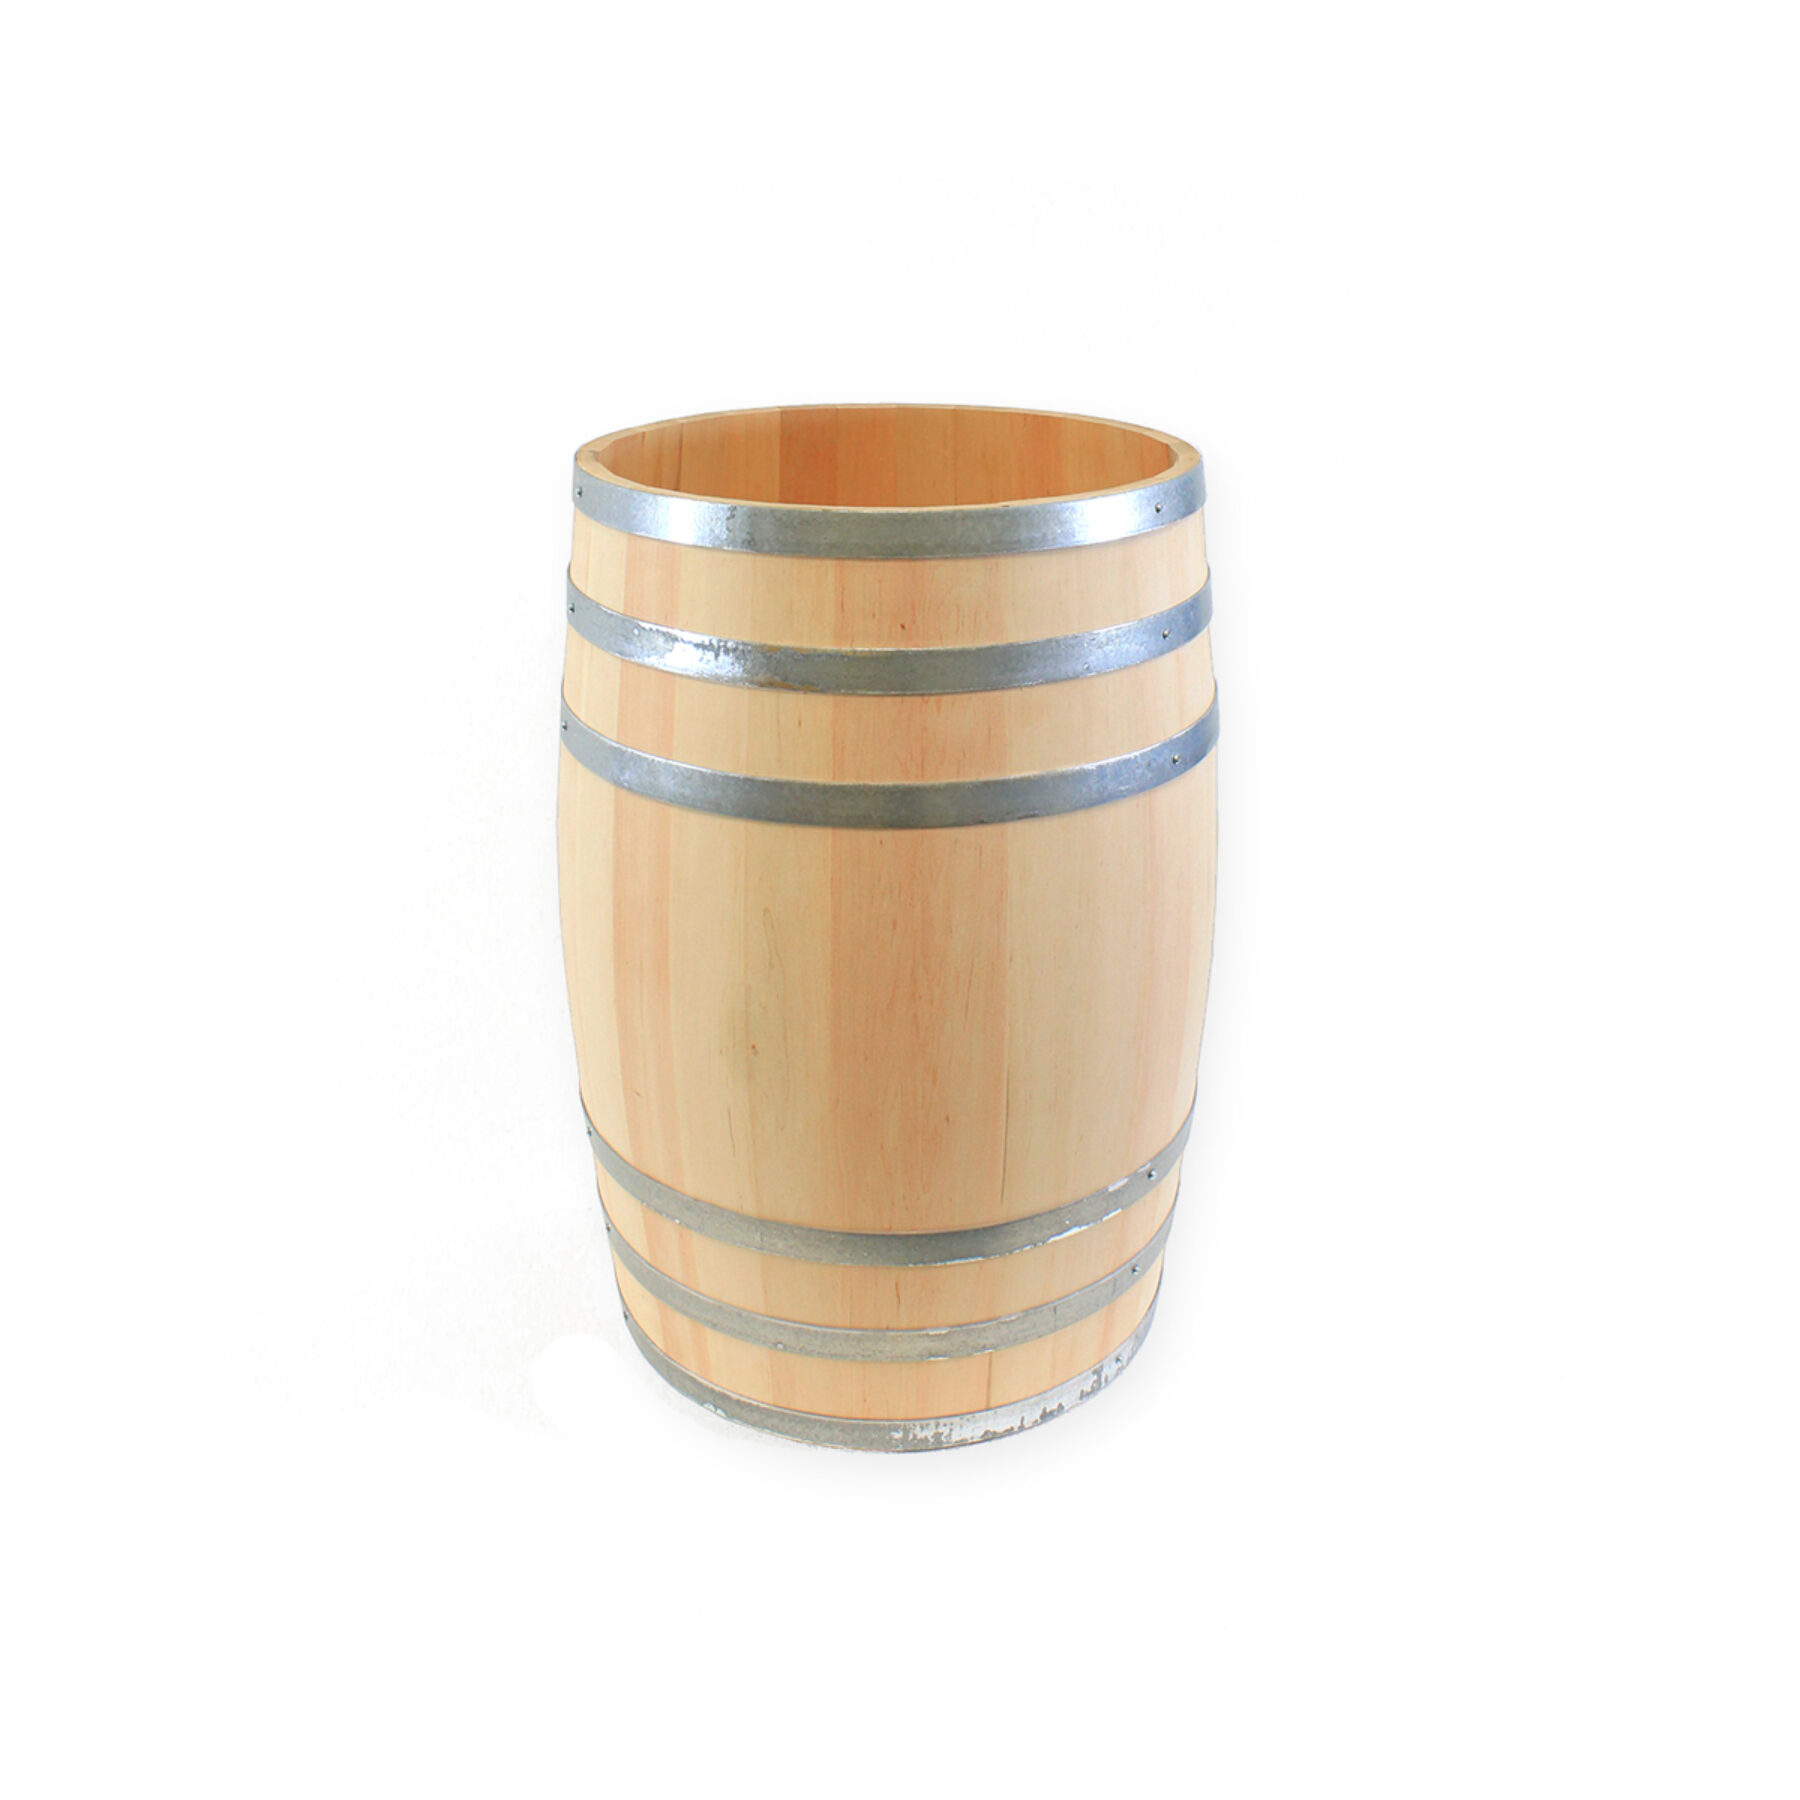 Small Wooden Display Barrel